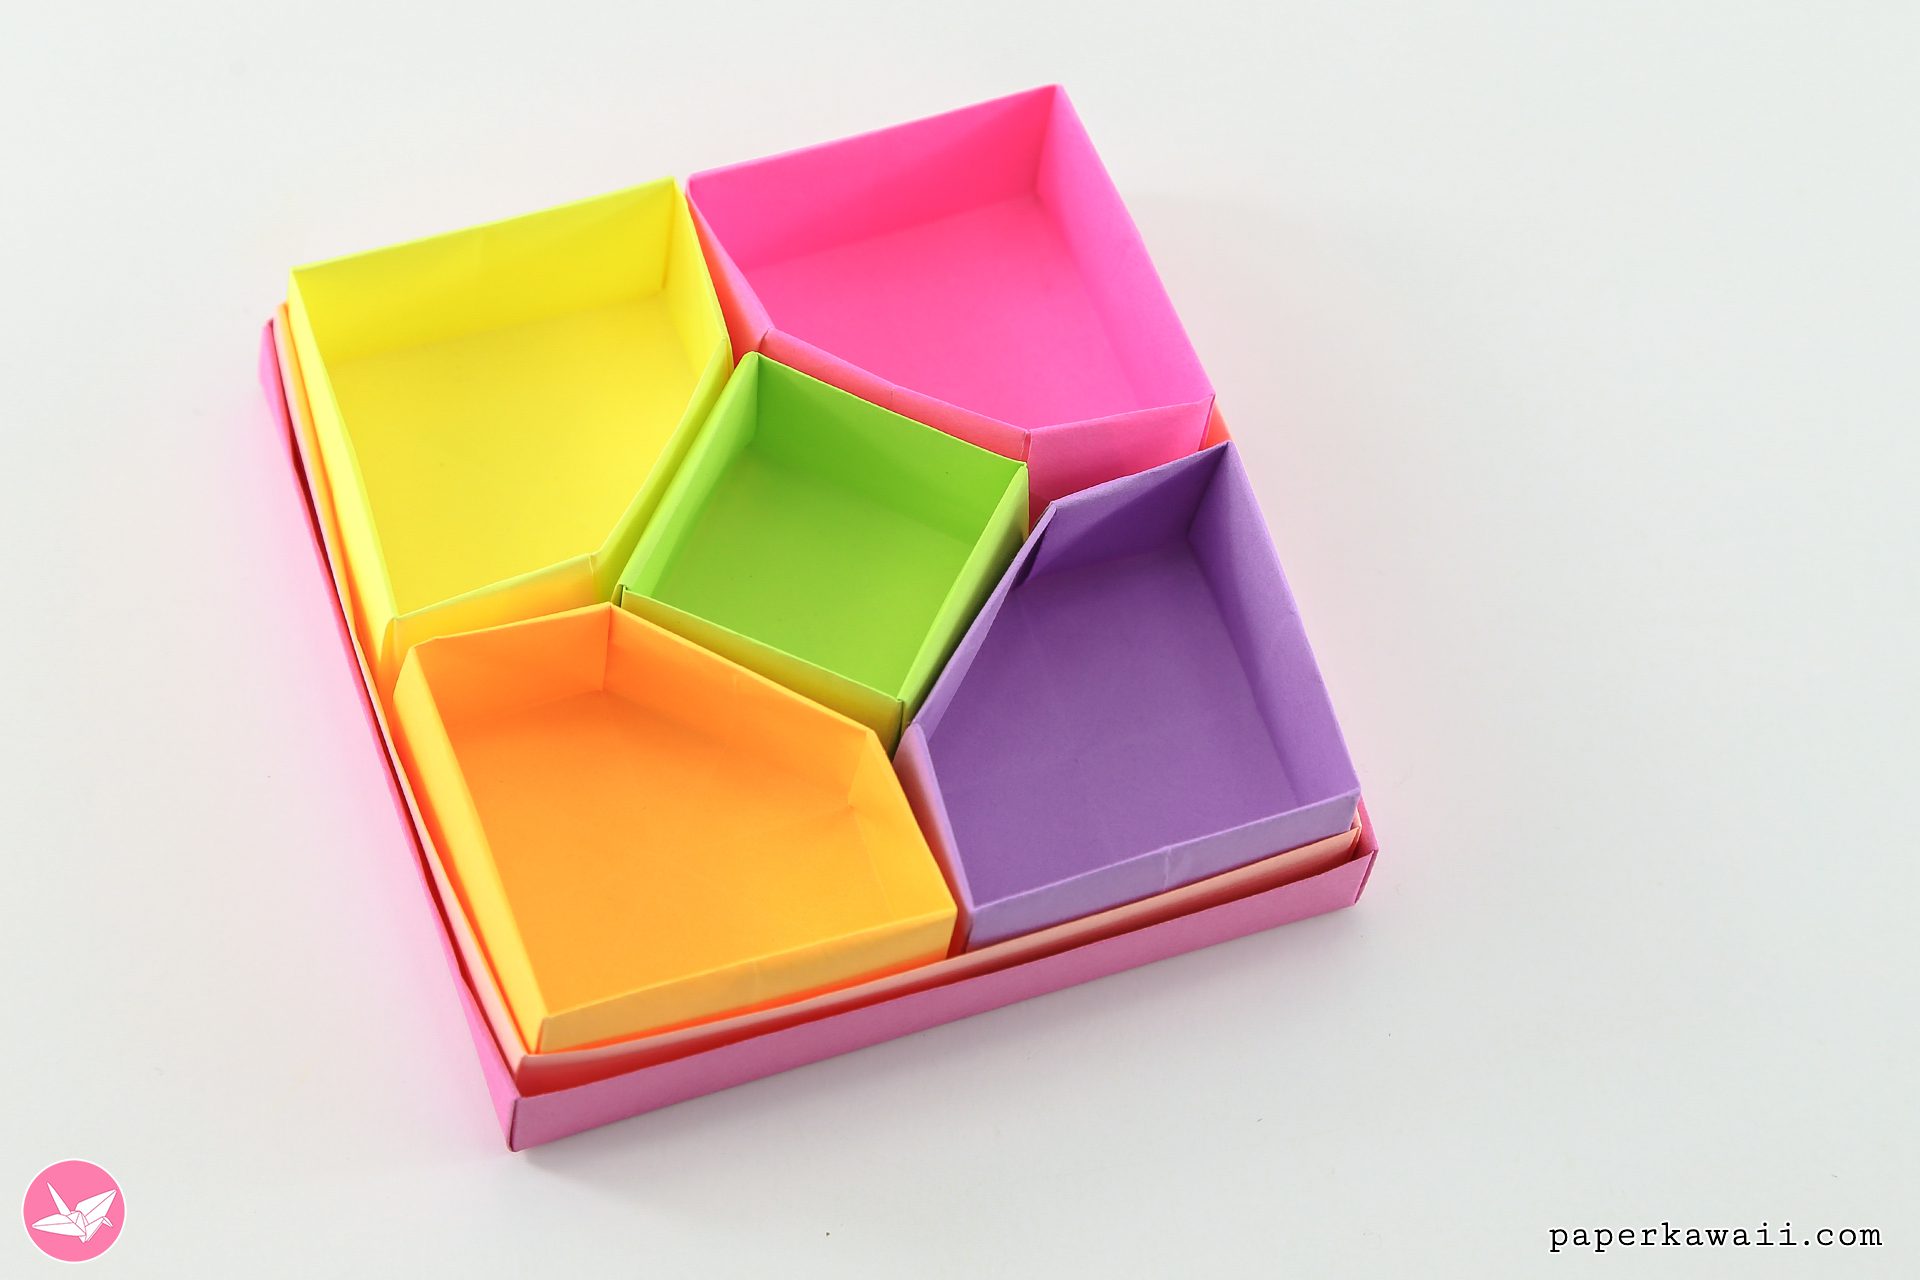 https://www.paperkawaii.com/wp-content/uploads/2021/08/origami-diamond-divider-box-tutorial-paper-kawaii-05.jpg